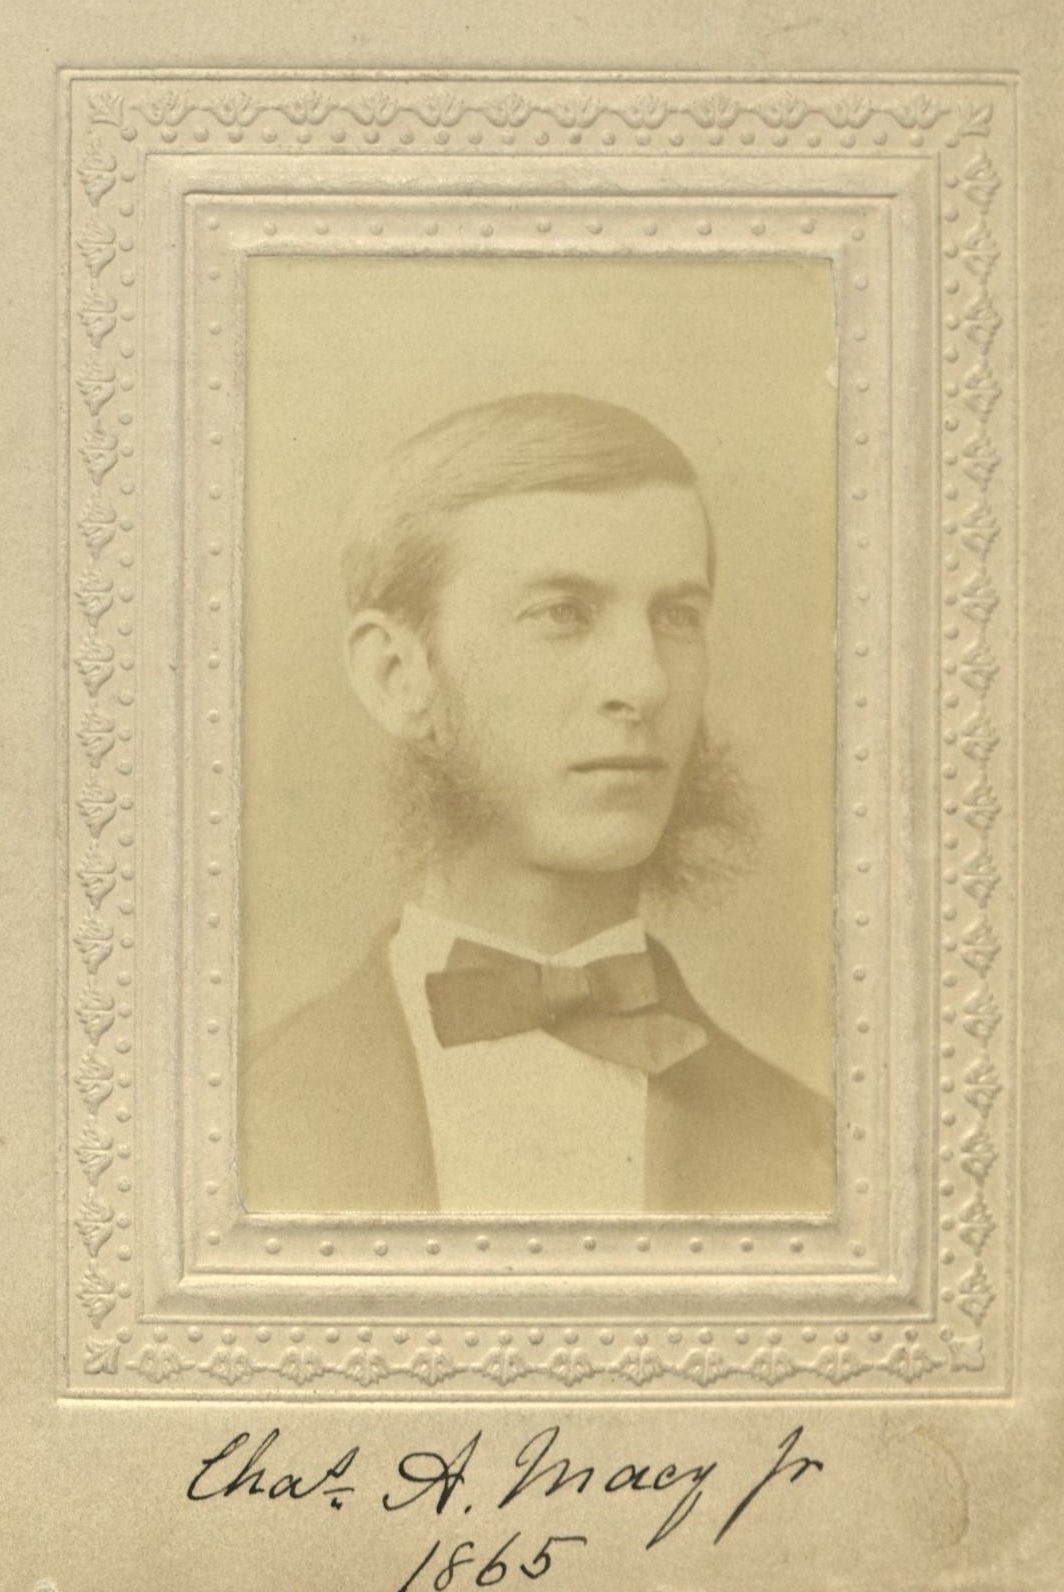 Member portrait of Charles A. Macy Jr.